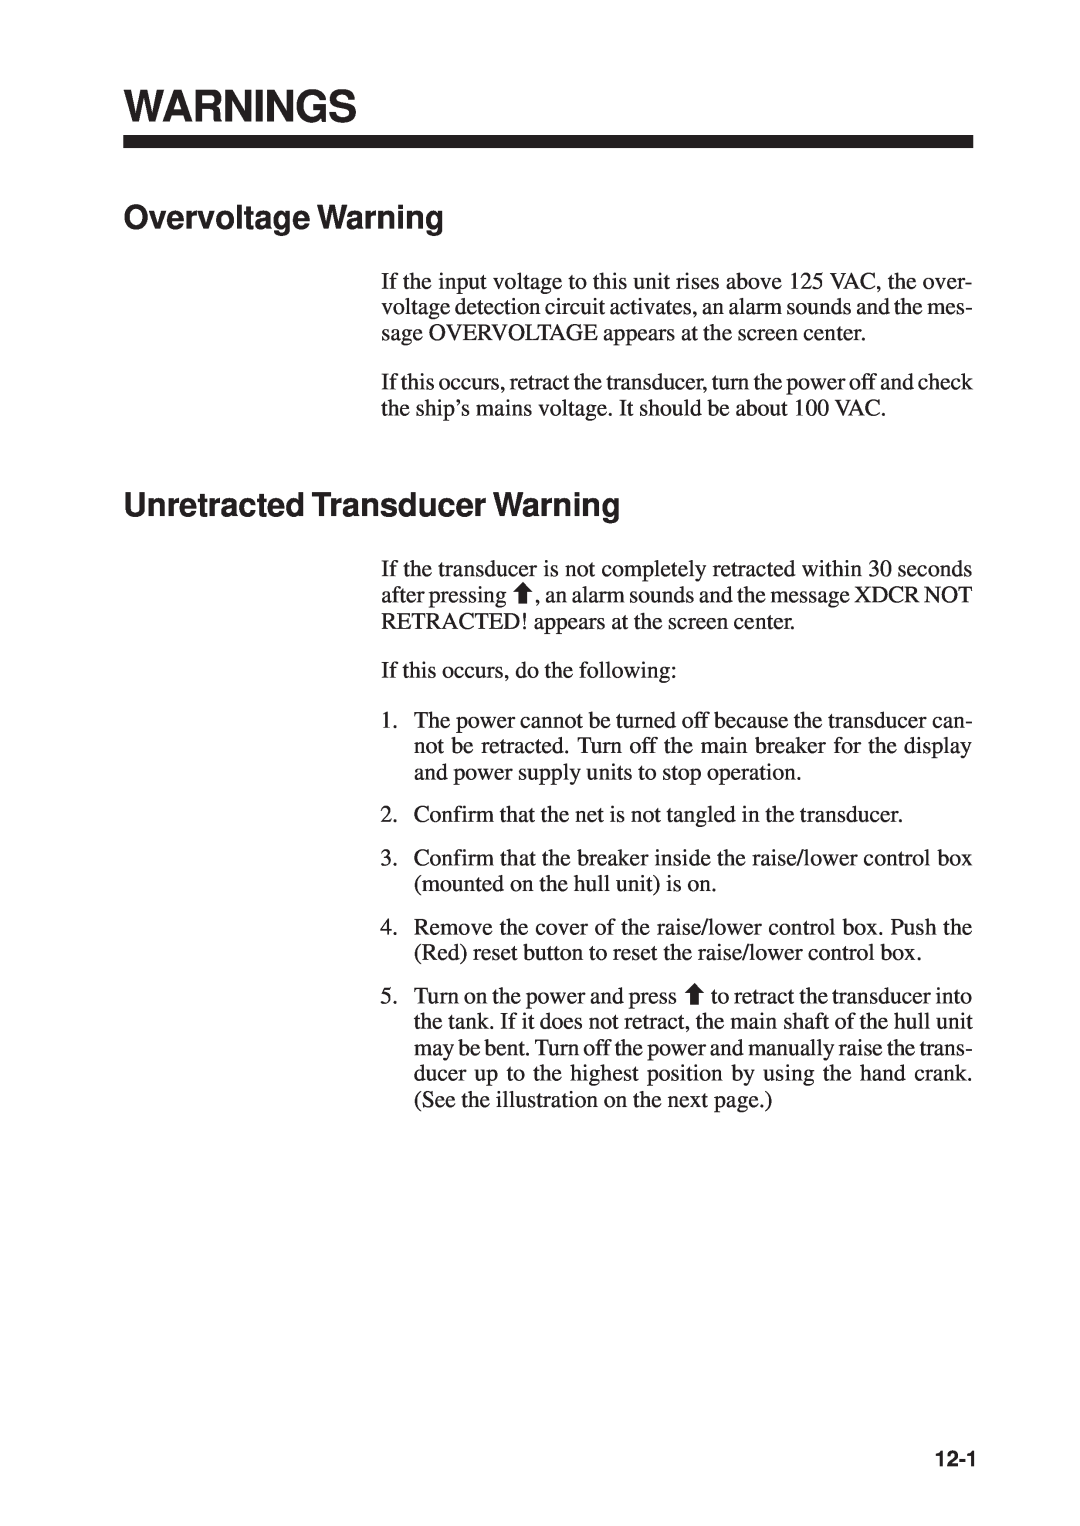 Furuno CSH-53 manual Warnings, Overvoltage Warning, Unretracted Transducer Warning 